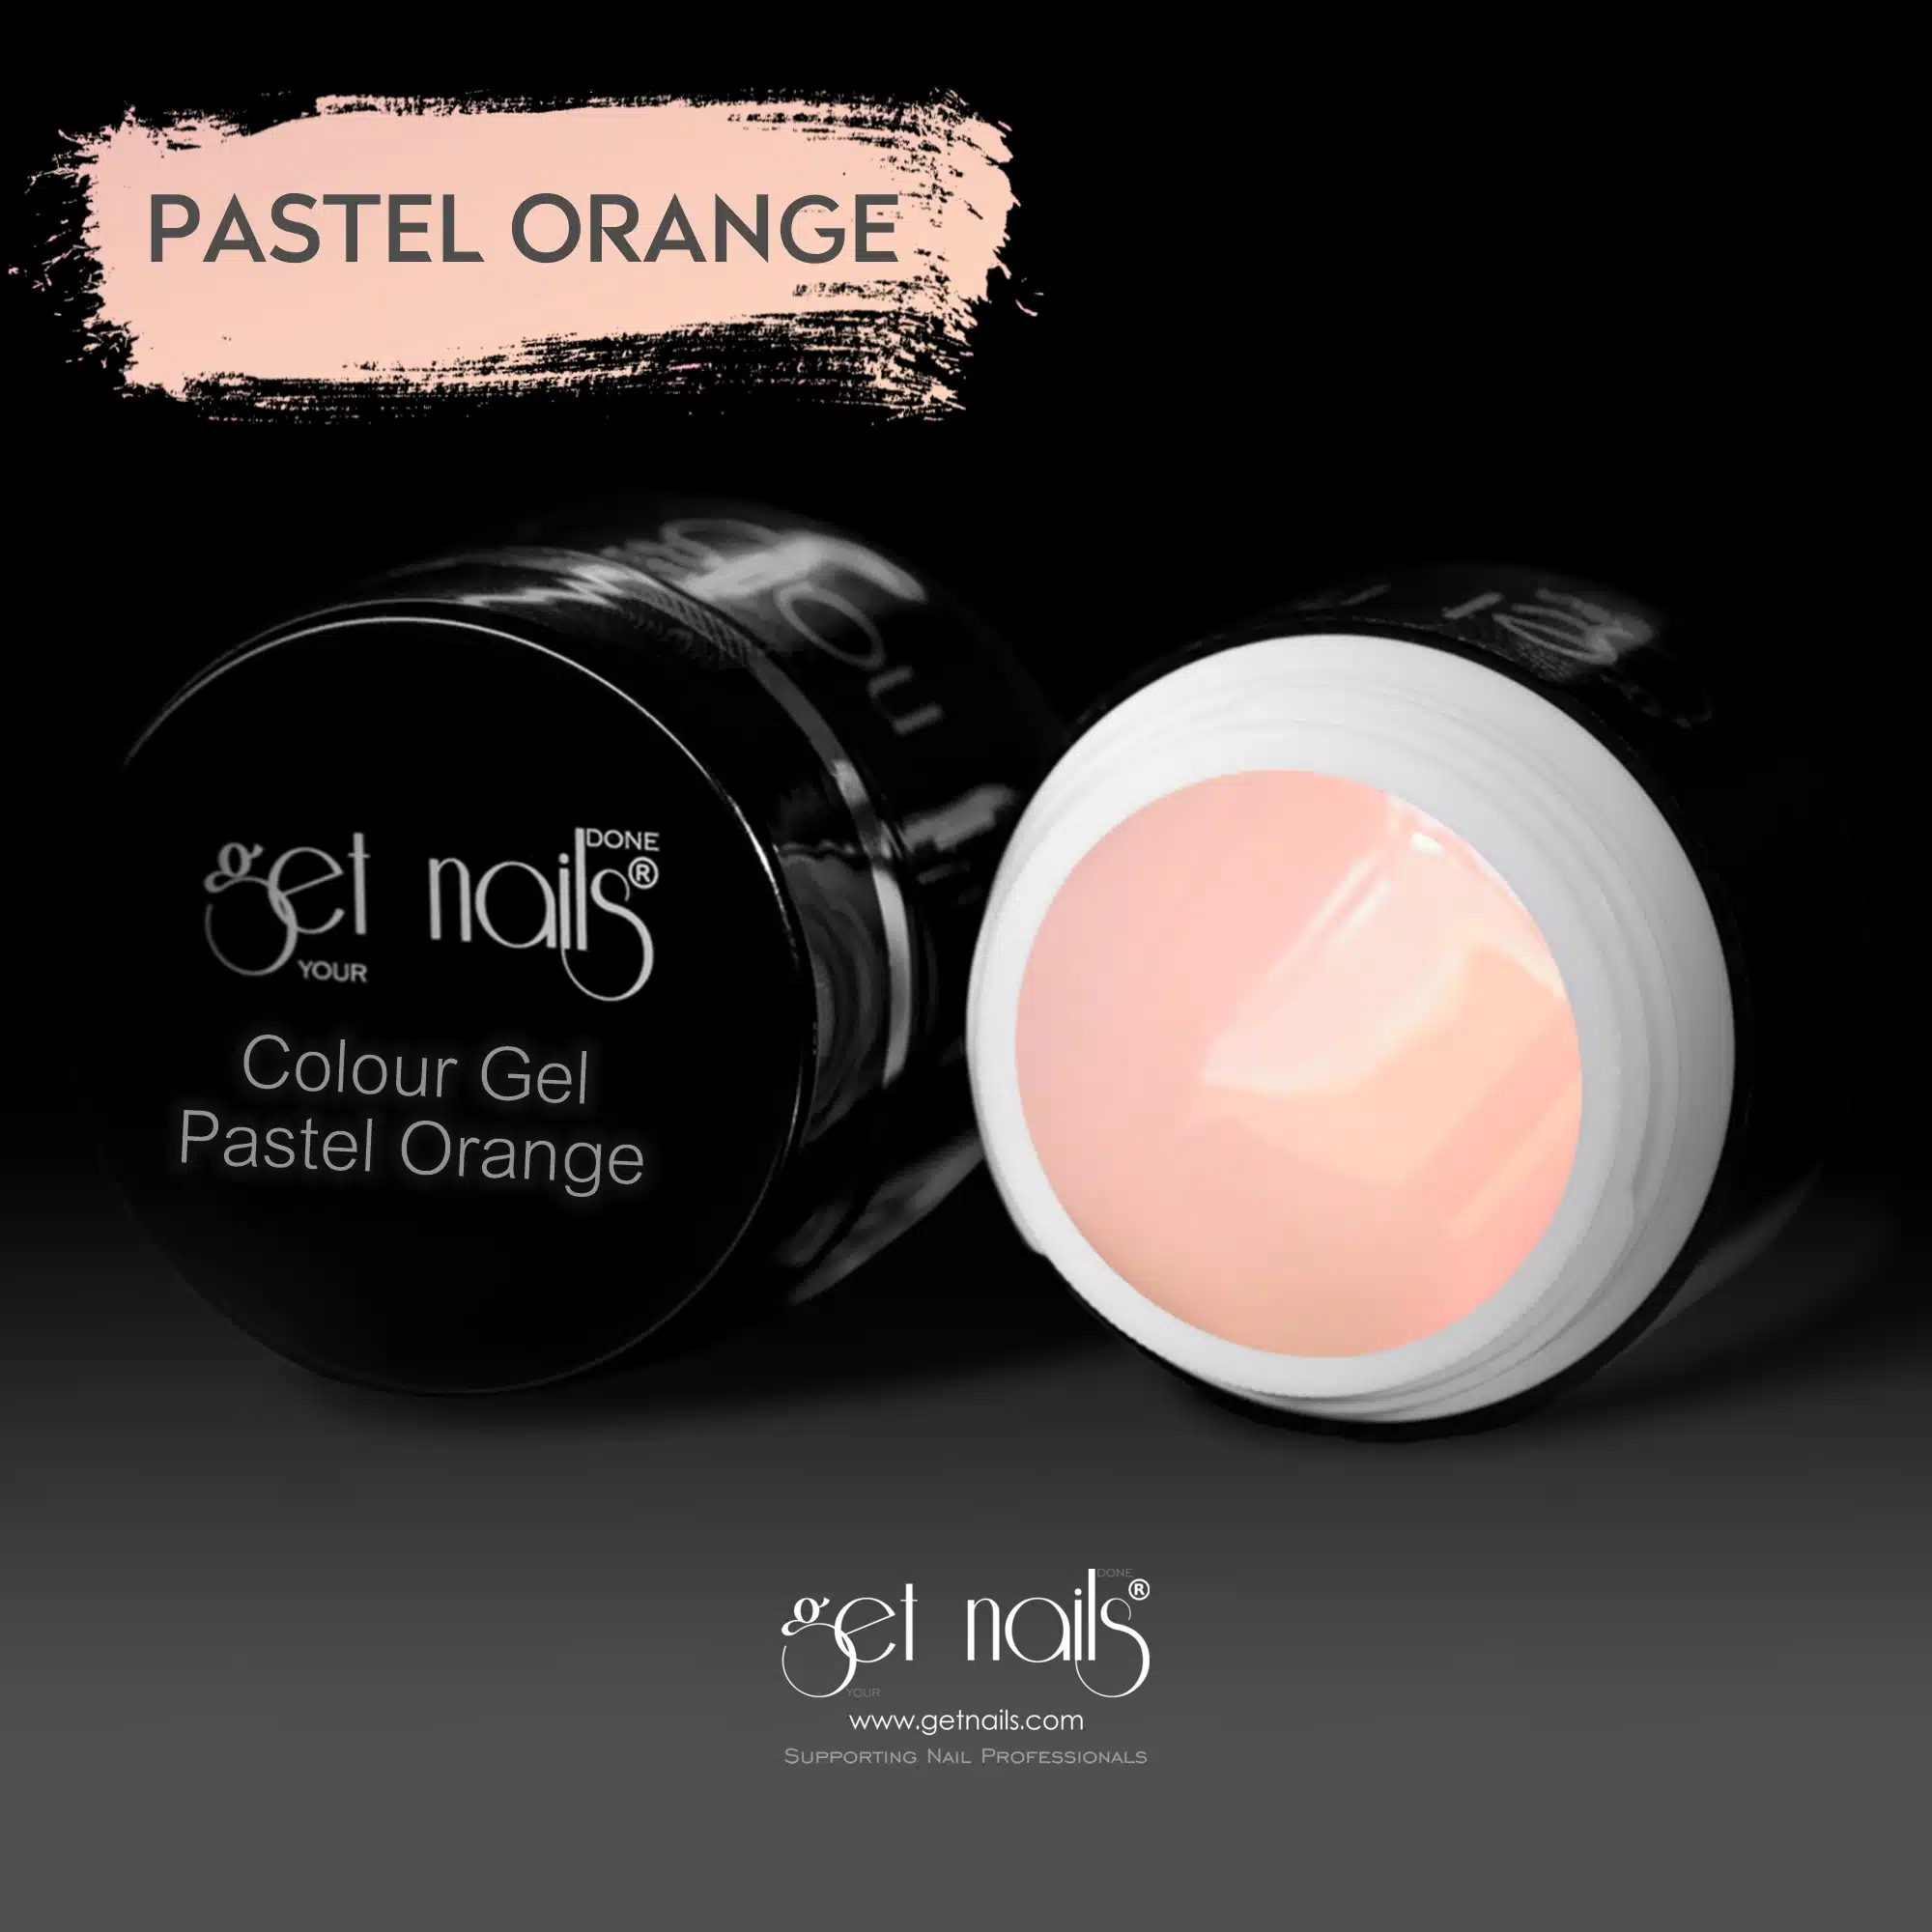 Get Nails Austria - Color Gel Pastel Orange 5g